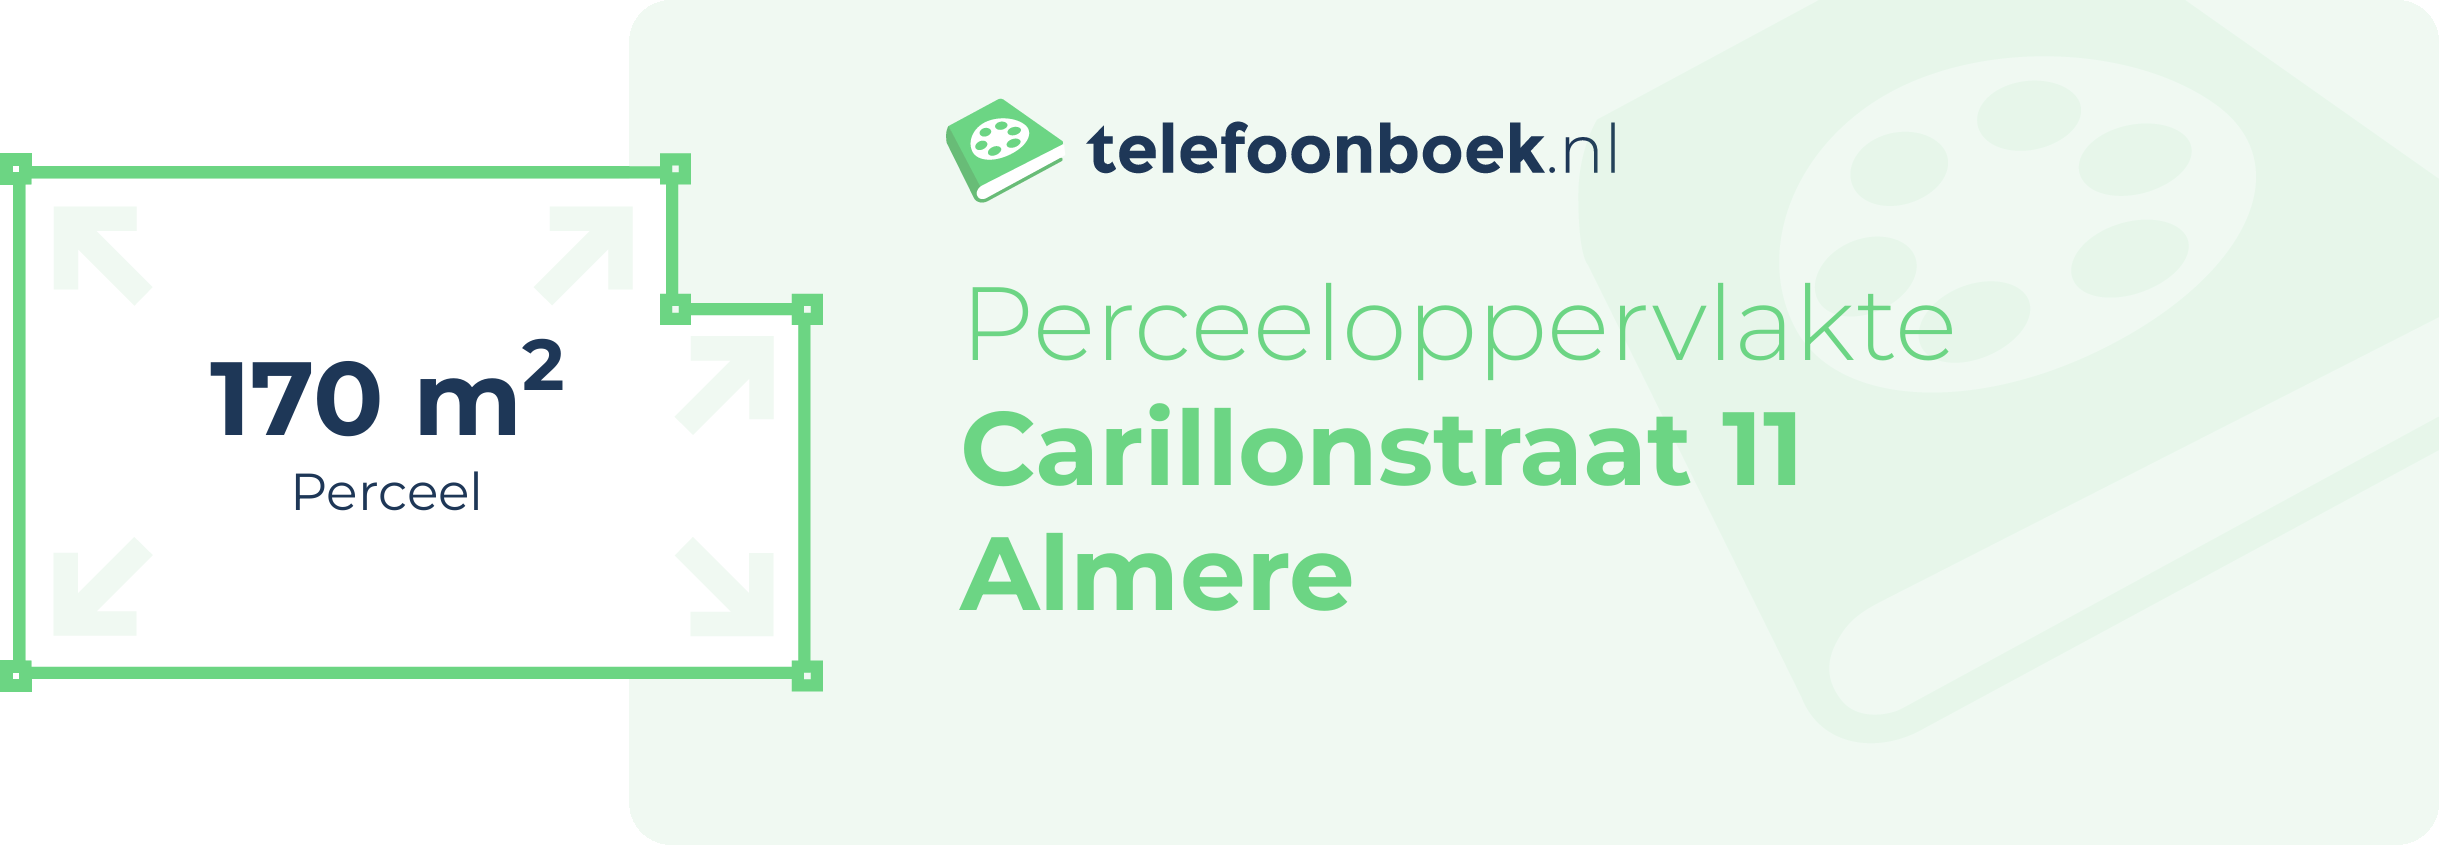 Perceeloppervlakte Carillonstraat 11 Almere